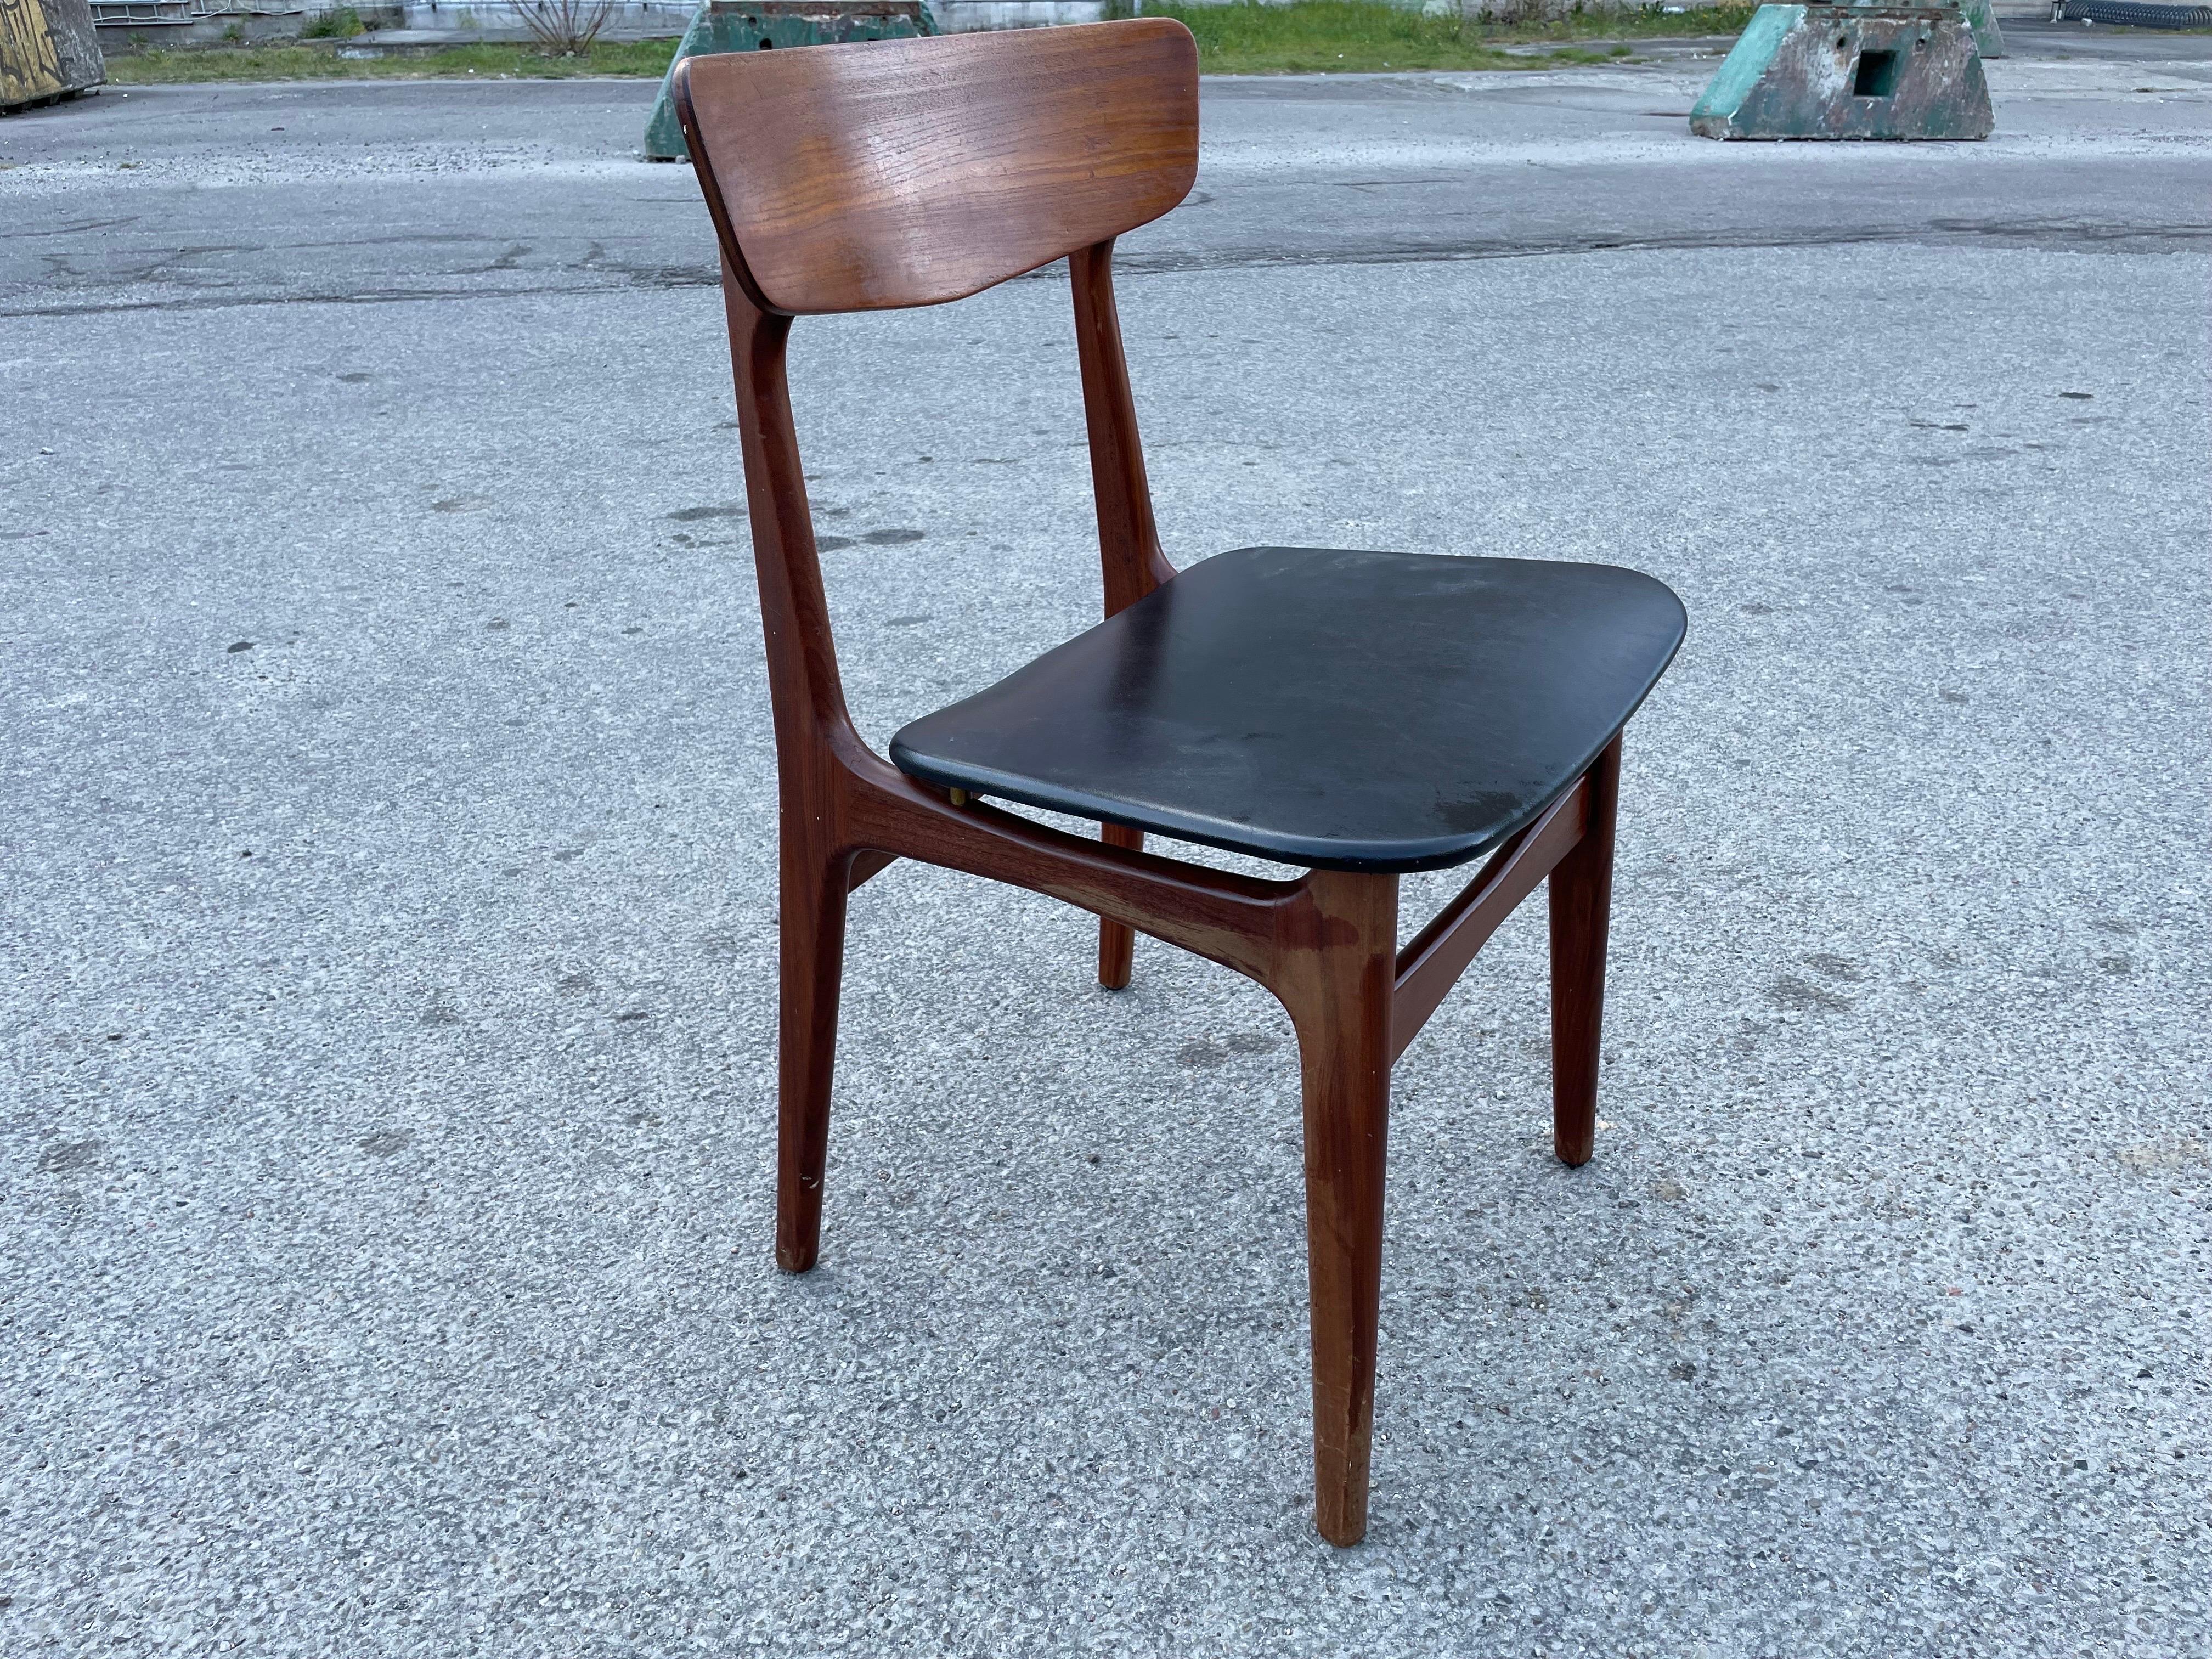 Set of 6 Midcentury Danish Chairs in Teak by Schiønning & Elgaard, 1960s For Sale 8